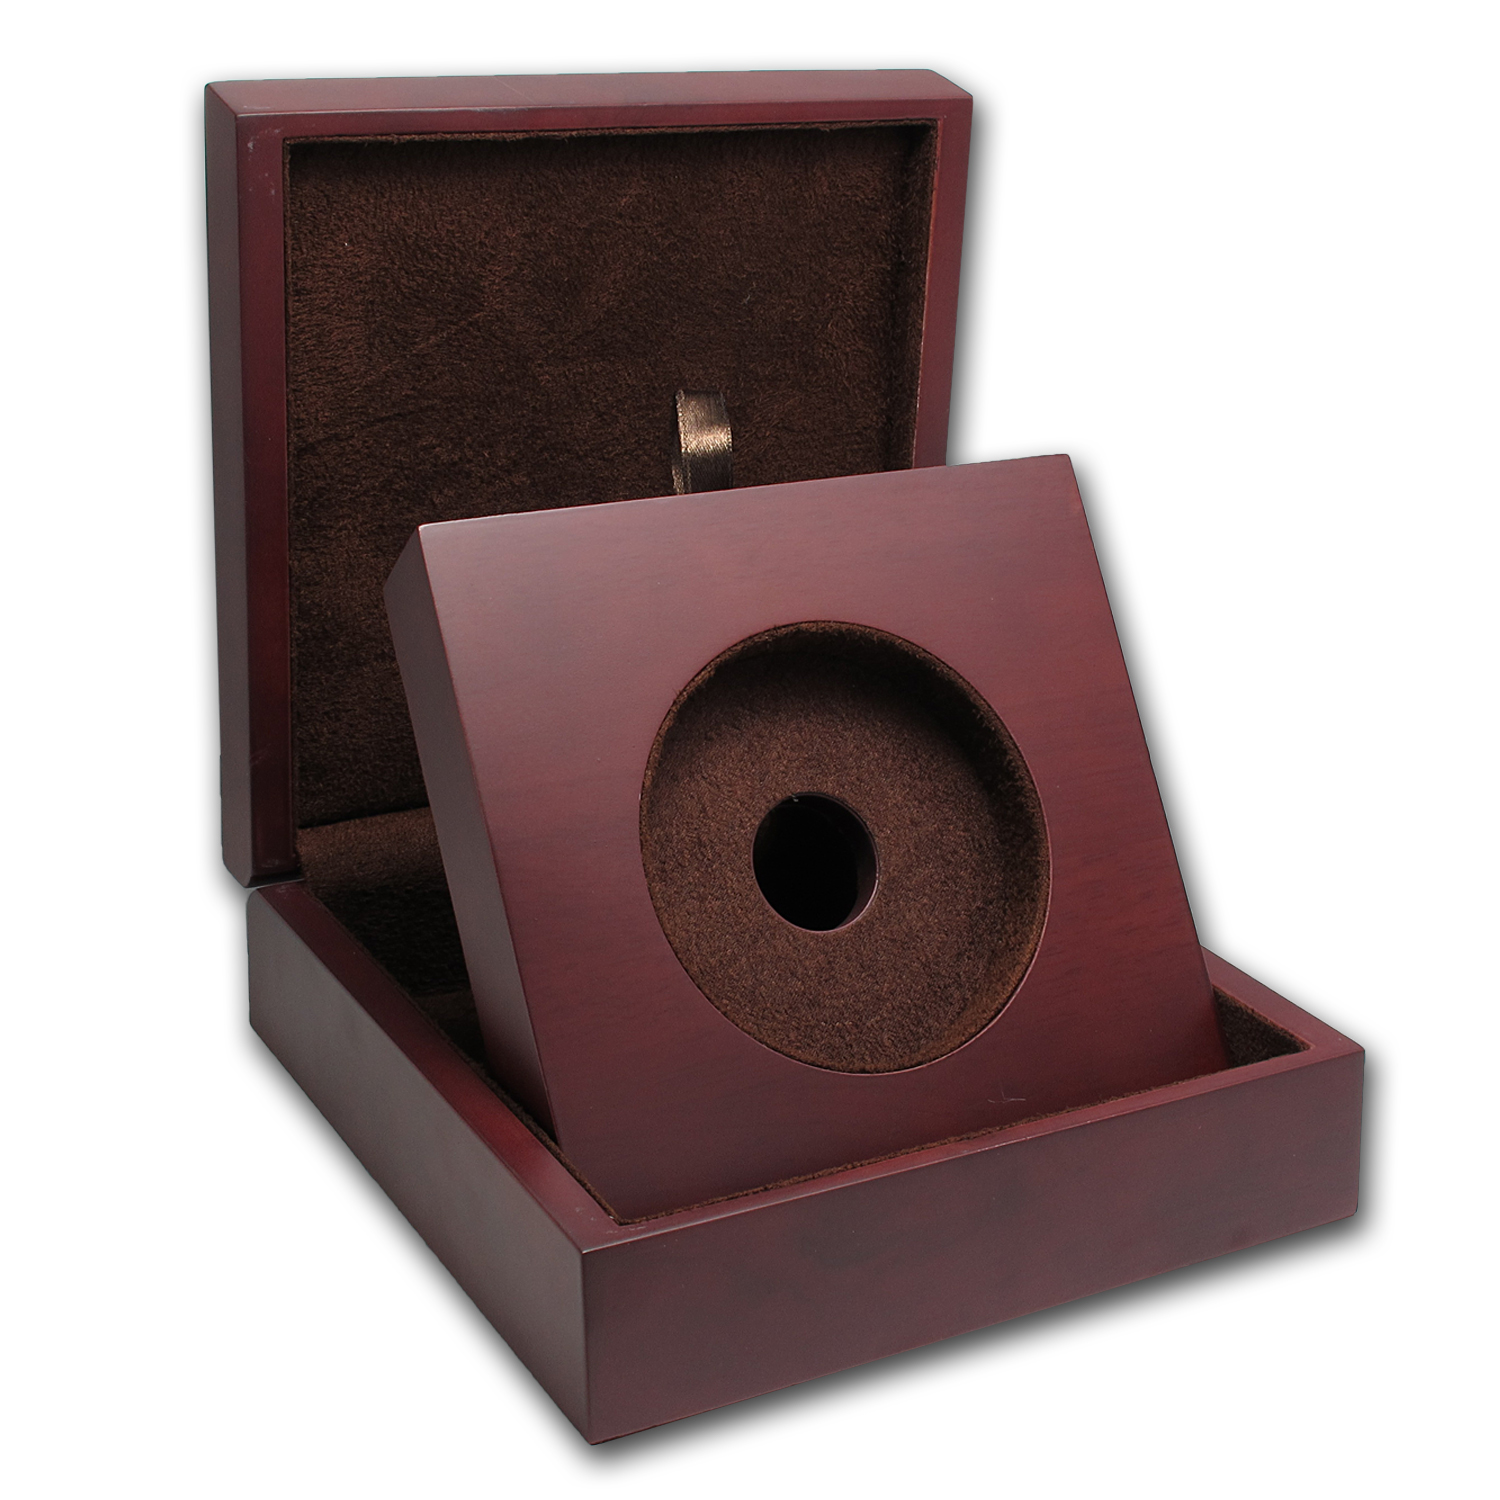 Buy APMEX Wood Gift Box - 5 oz US Mint ATB Silver Coin w/Z5 Capsule